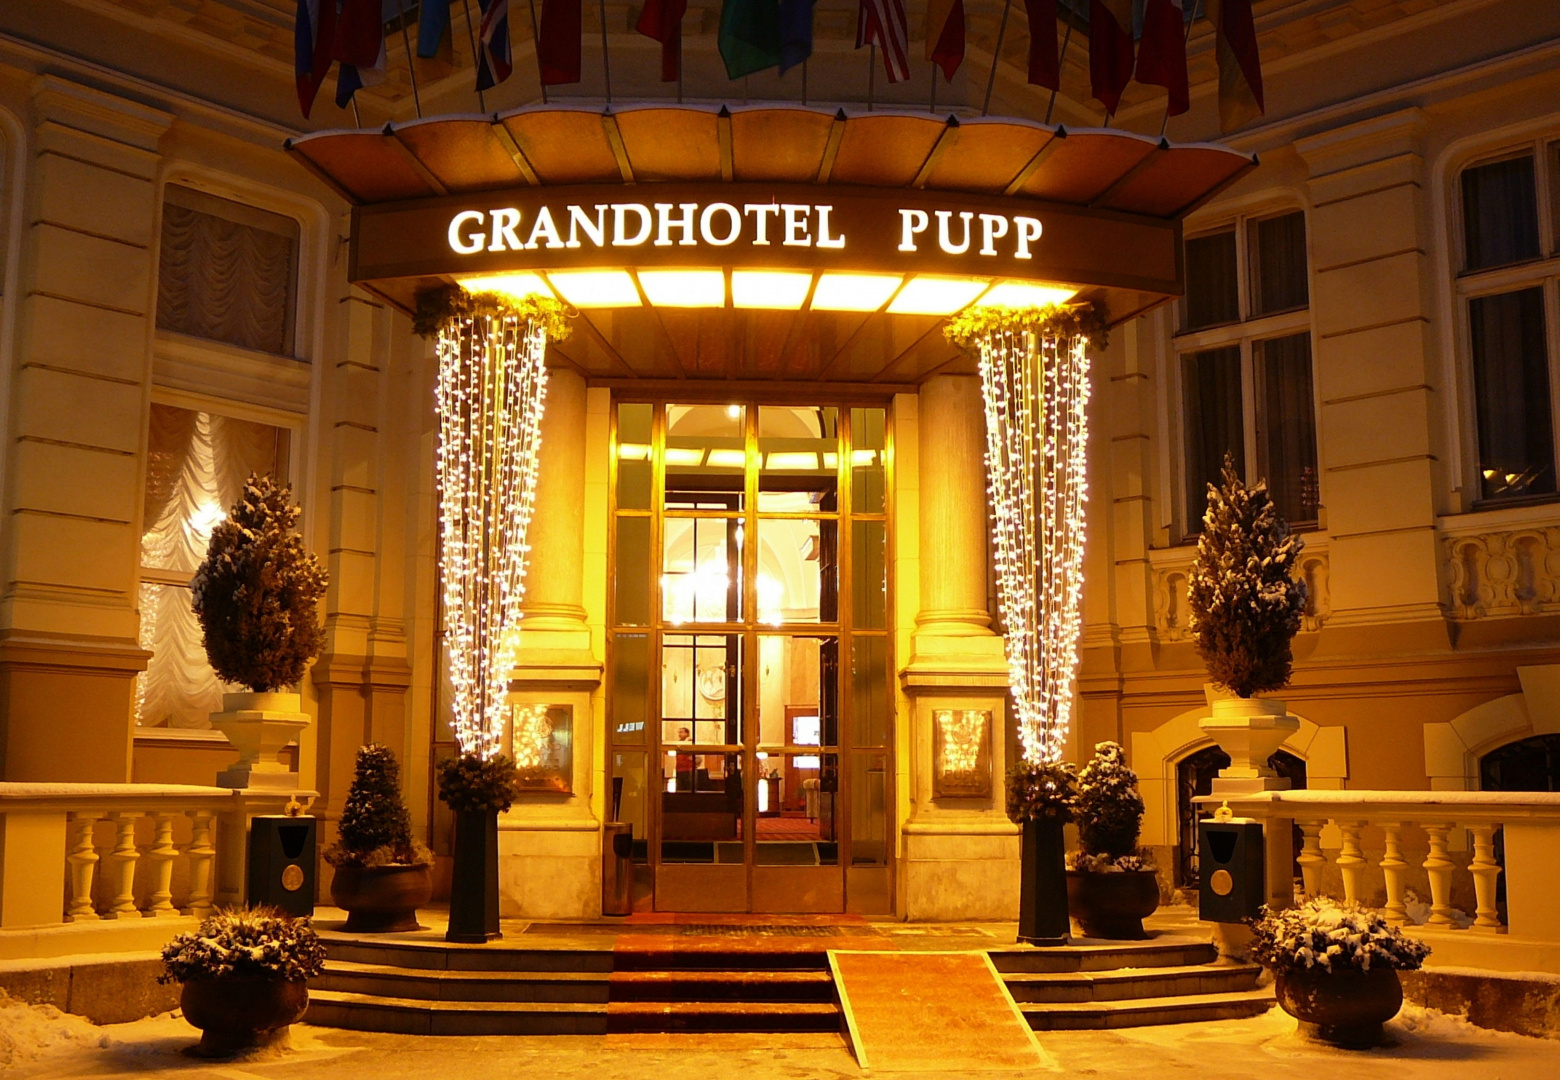 Grandhotel Pupp Karlovy Vary Finest Prague Golf Breaks Best Czech Golf Holidays